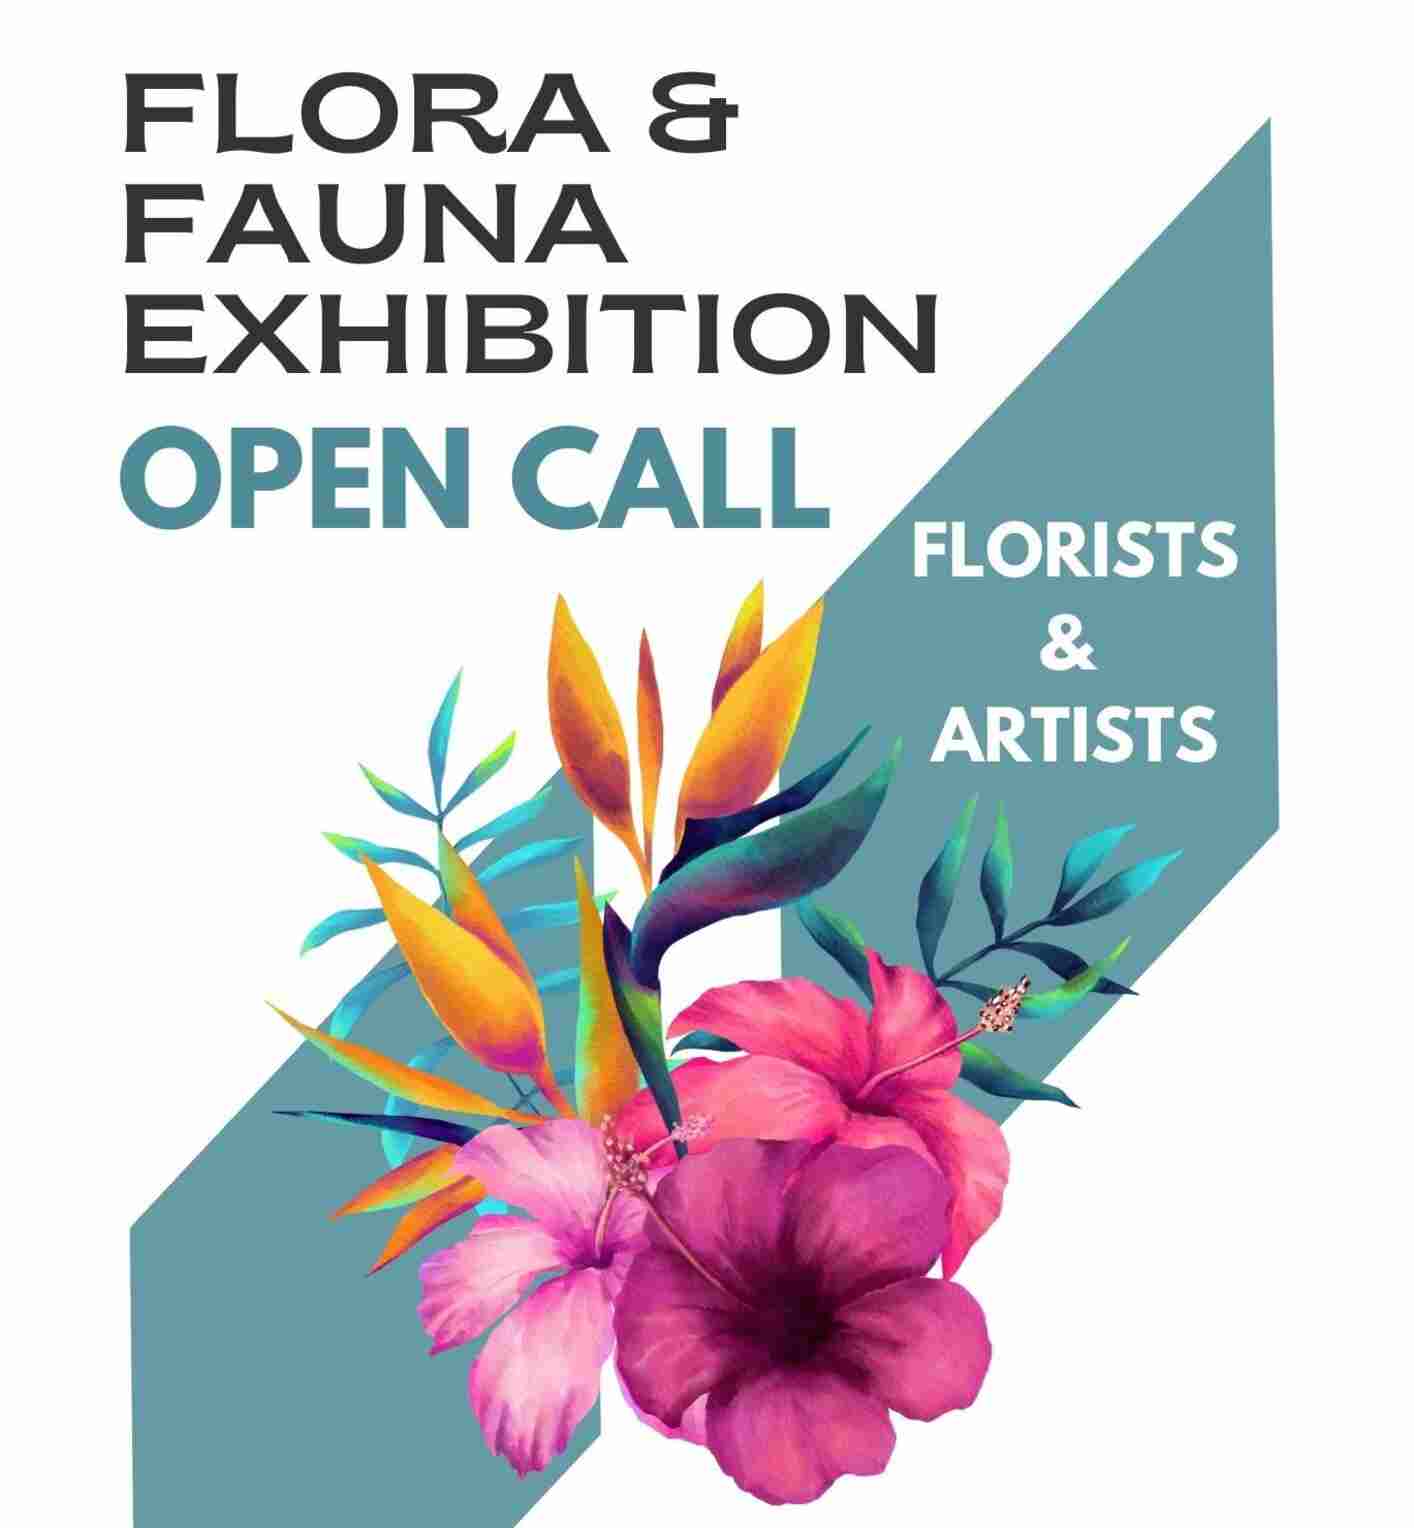 poster for Flora & Fauna exhibition open call